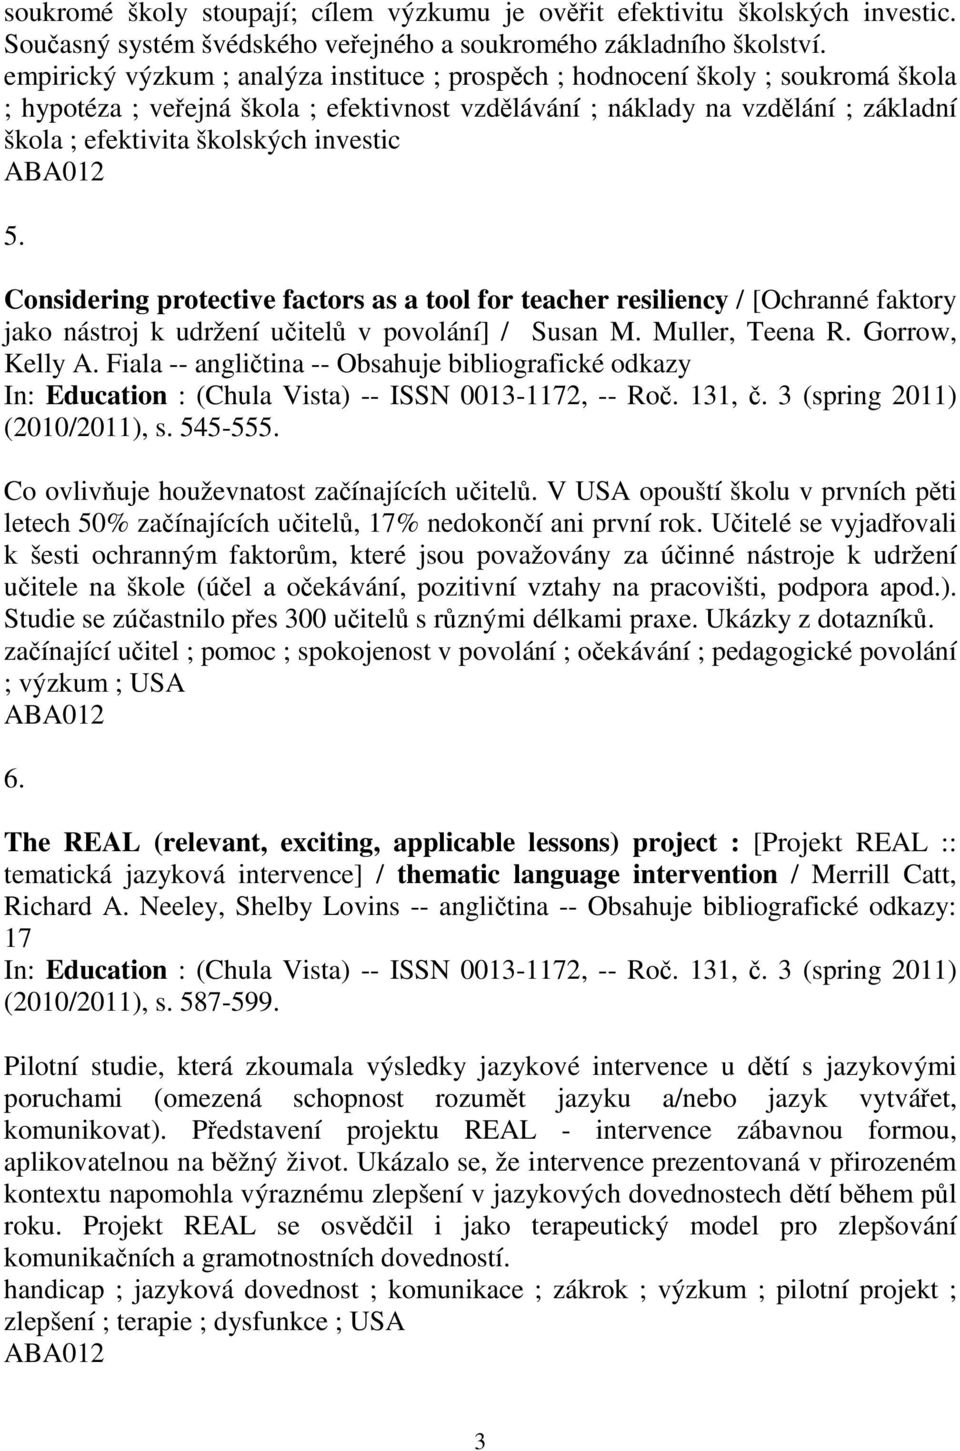 investic 5. Considering protective factors as a tool for teacher resiliency / [Ochranné faktory jako nástroj k udržení uitel v povolání] / Susan M. Muller, Teena R. Gorrow, Kelly A.